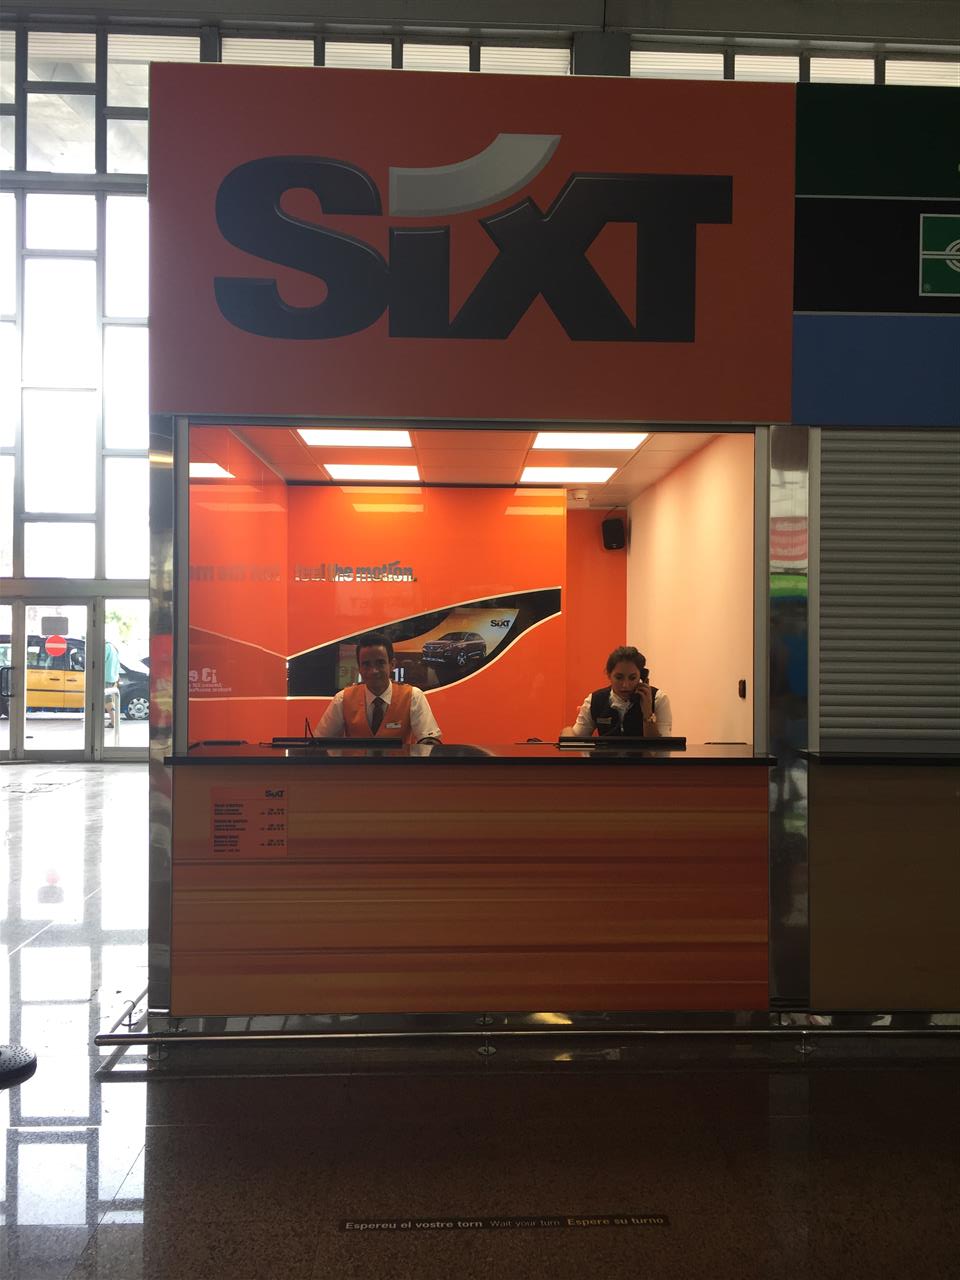 Images SIXT  - Aeropuerto El Prat